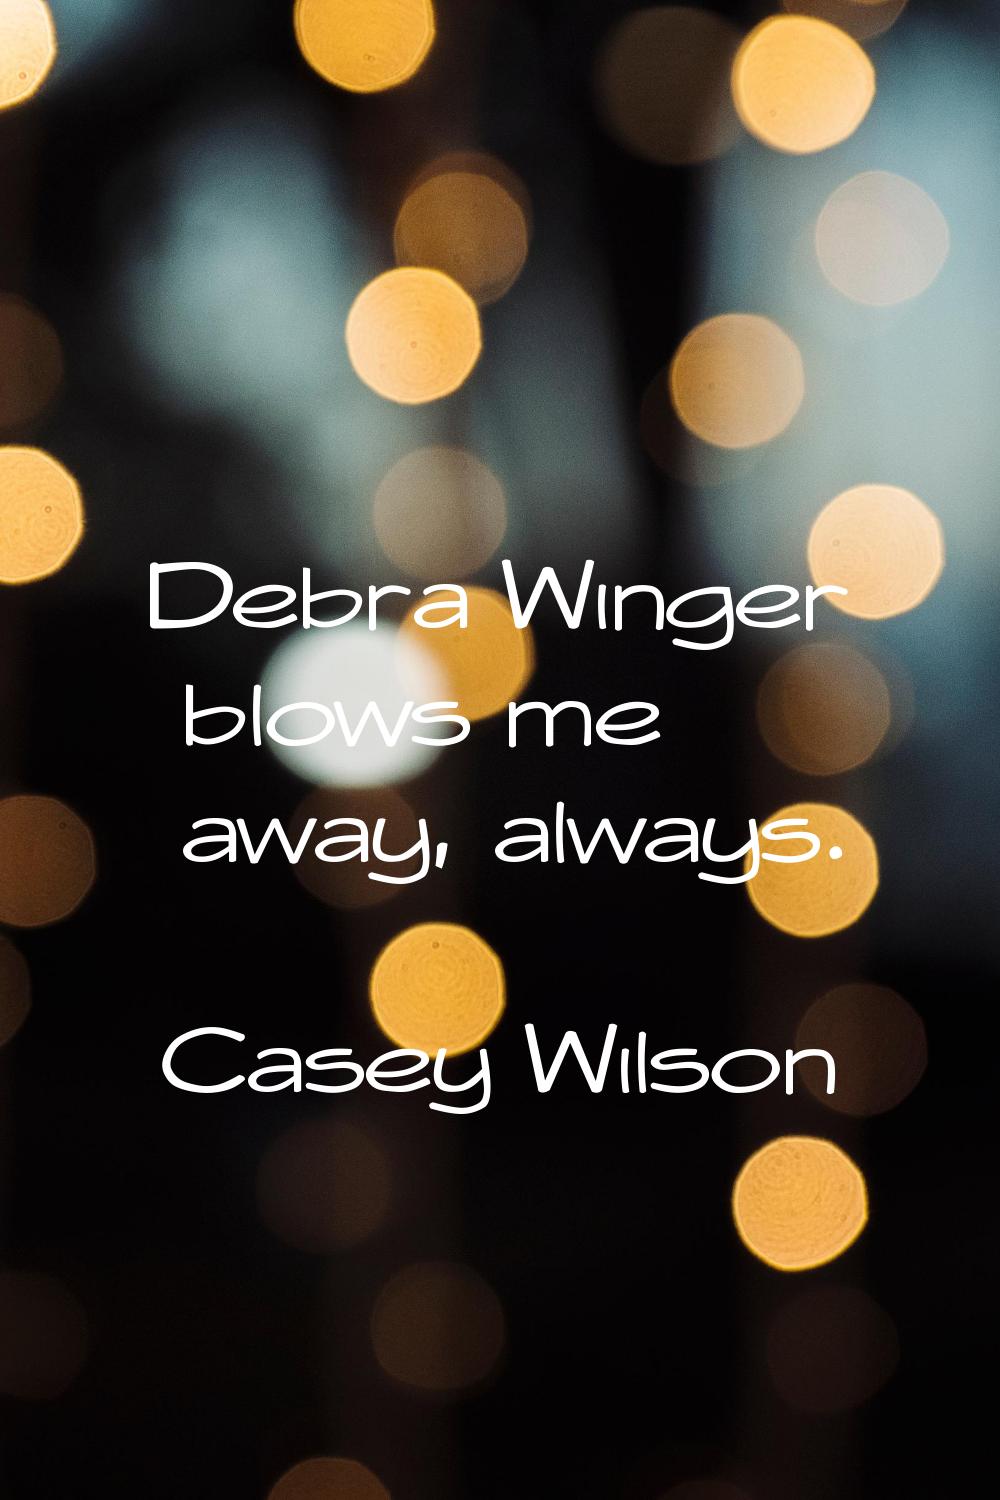 Debra Winger blows me away, always.